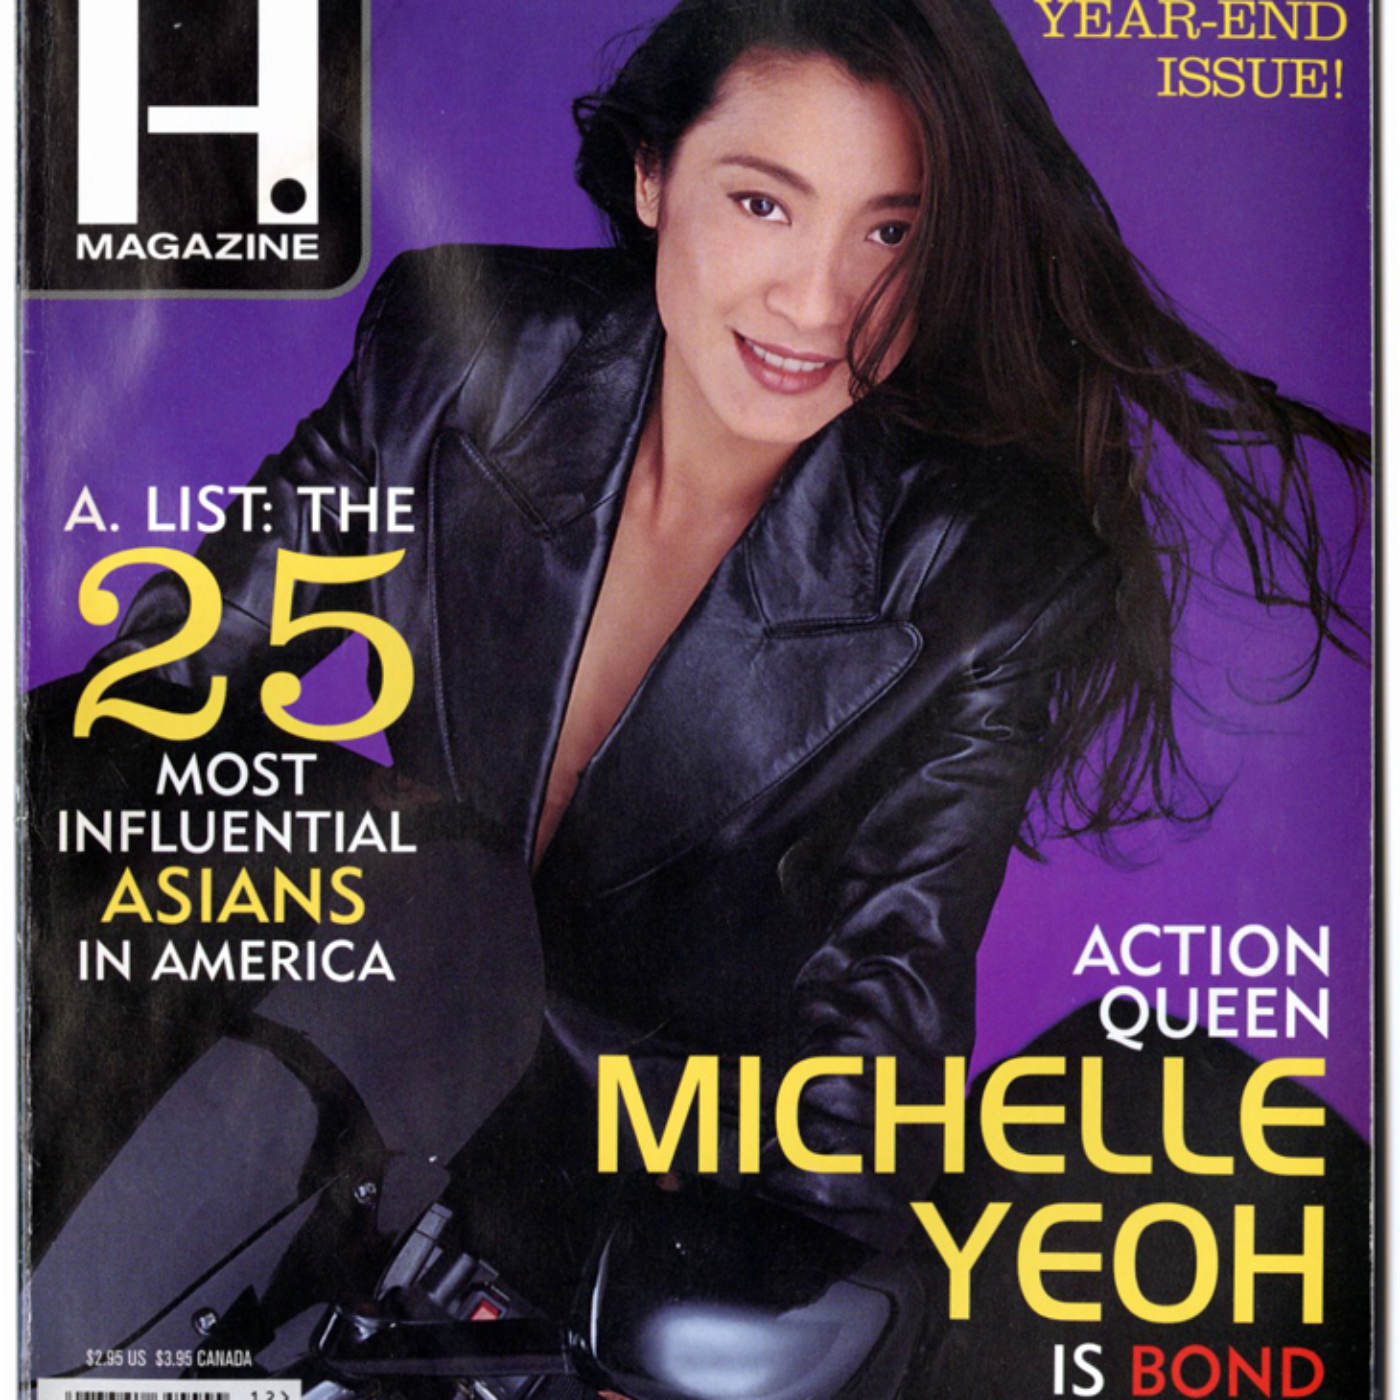 A. 杂志以杨紫琼作为新型“邦女郎”的角色为封面故事——在1997 年 12 月/1998 1 月出品的影片《明日帝国》中，这个角色不是需要拯救的“退缩的紫罗兰”，而是既独立又能与007并肩作战的坚强的女性带头人。 美国华人博物馆 (MOCA) 馆藏。